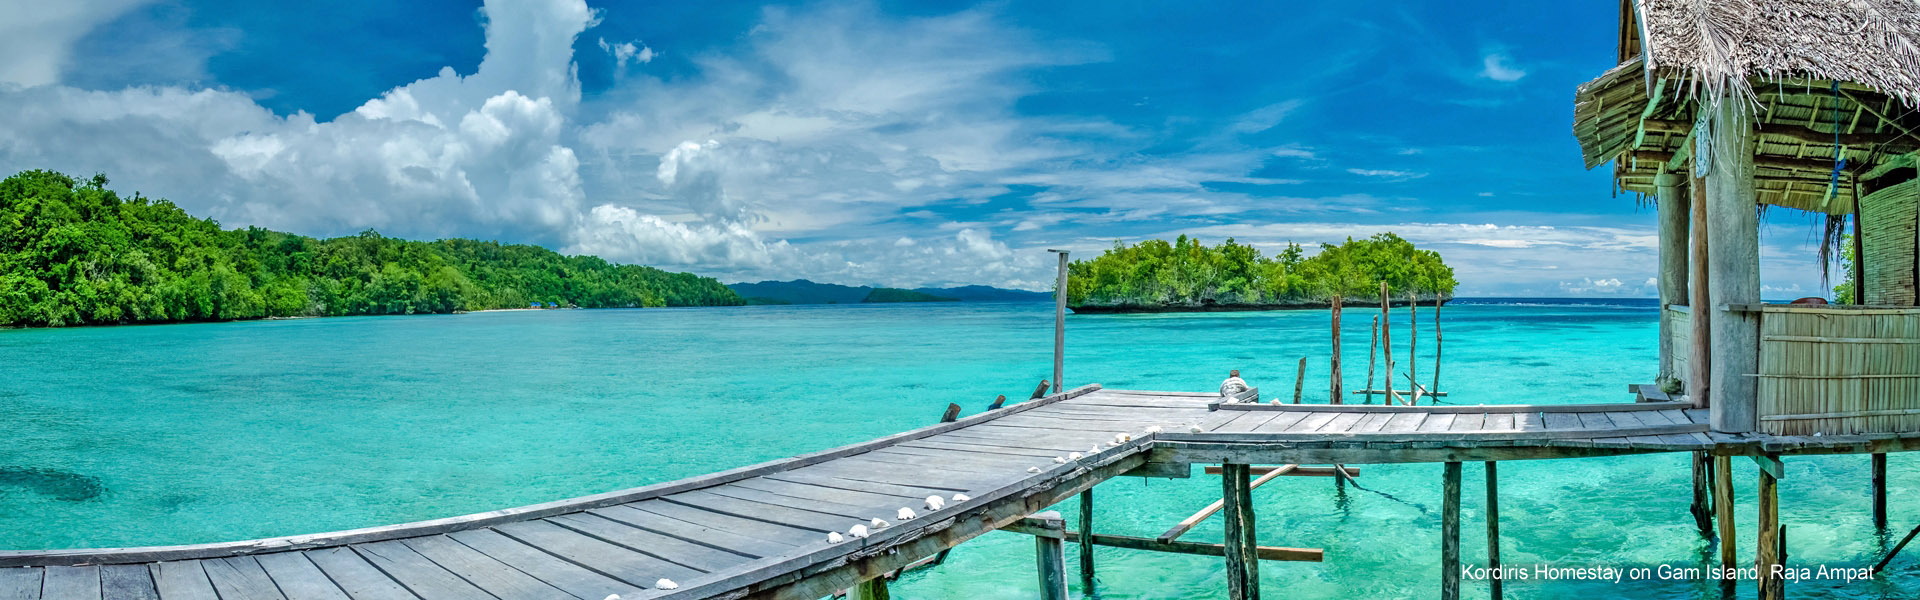 Biak Islands | West Papua Indonesia | Roamindonesia.com